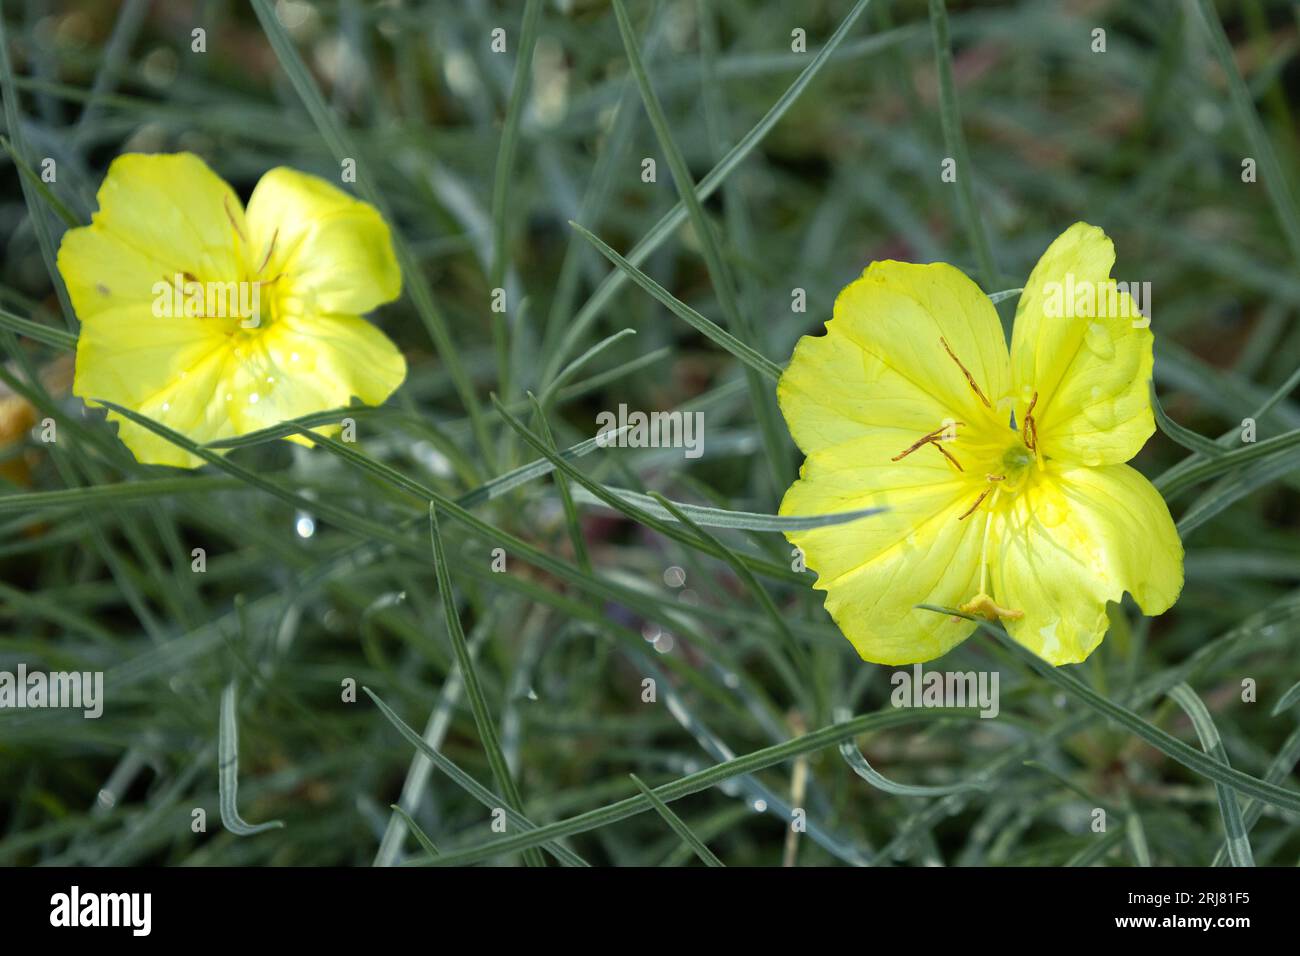 Oenothera fremontii 'Shimmer' flowers. Stock Photo